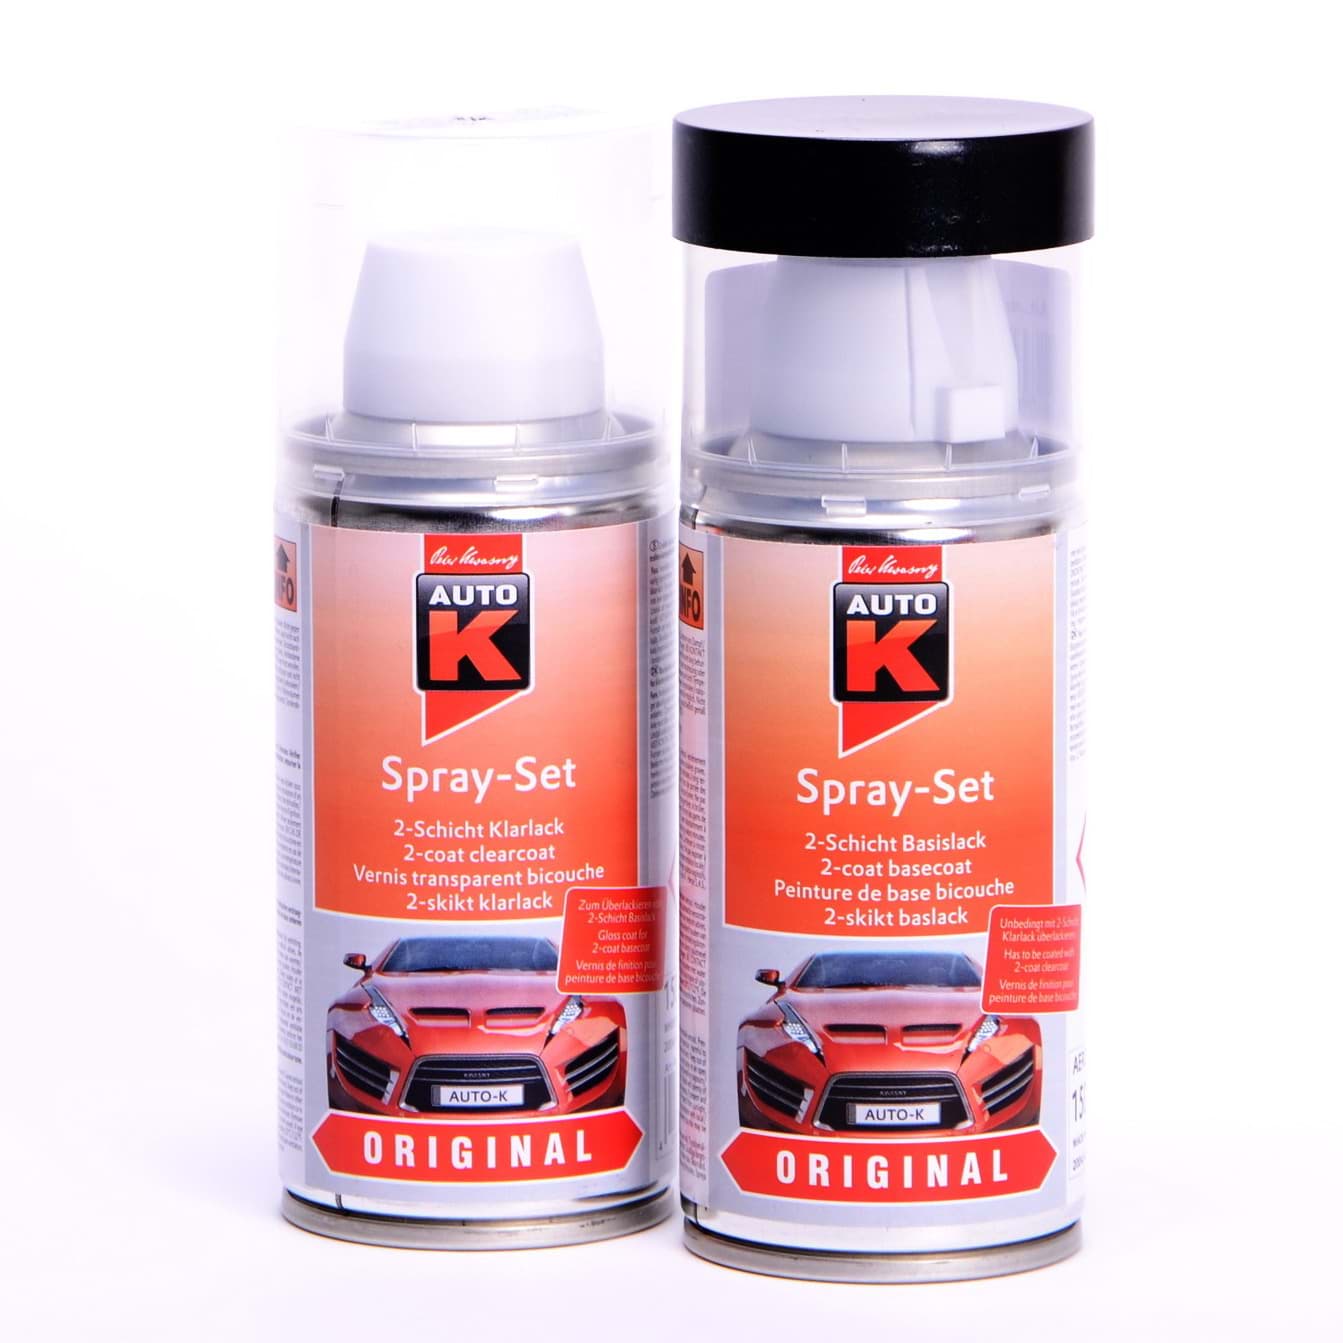 Afbeelding van Auto-K Spray-Set Autolack für Opel 568 Rioja perl met 21378